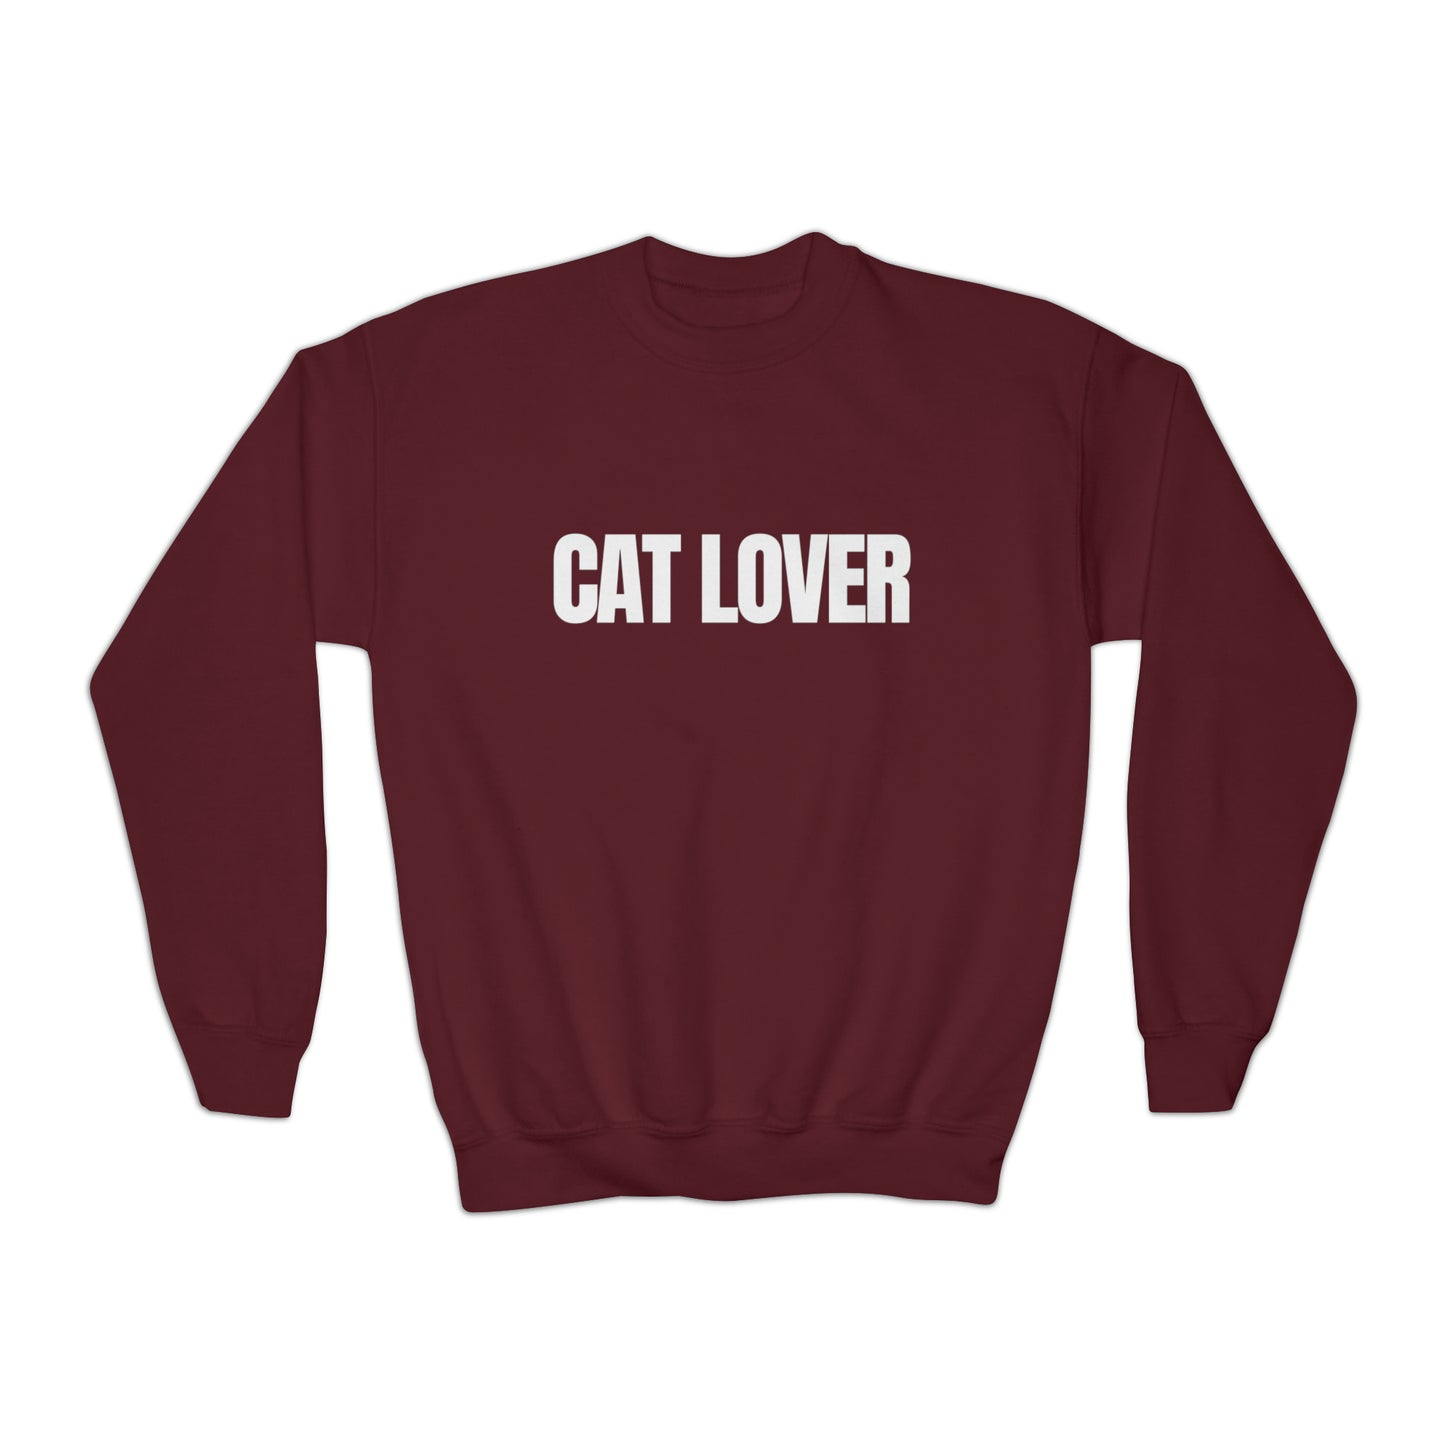 CAT LOVER Youth Crewneck Sweatshirt